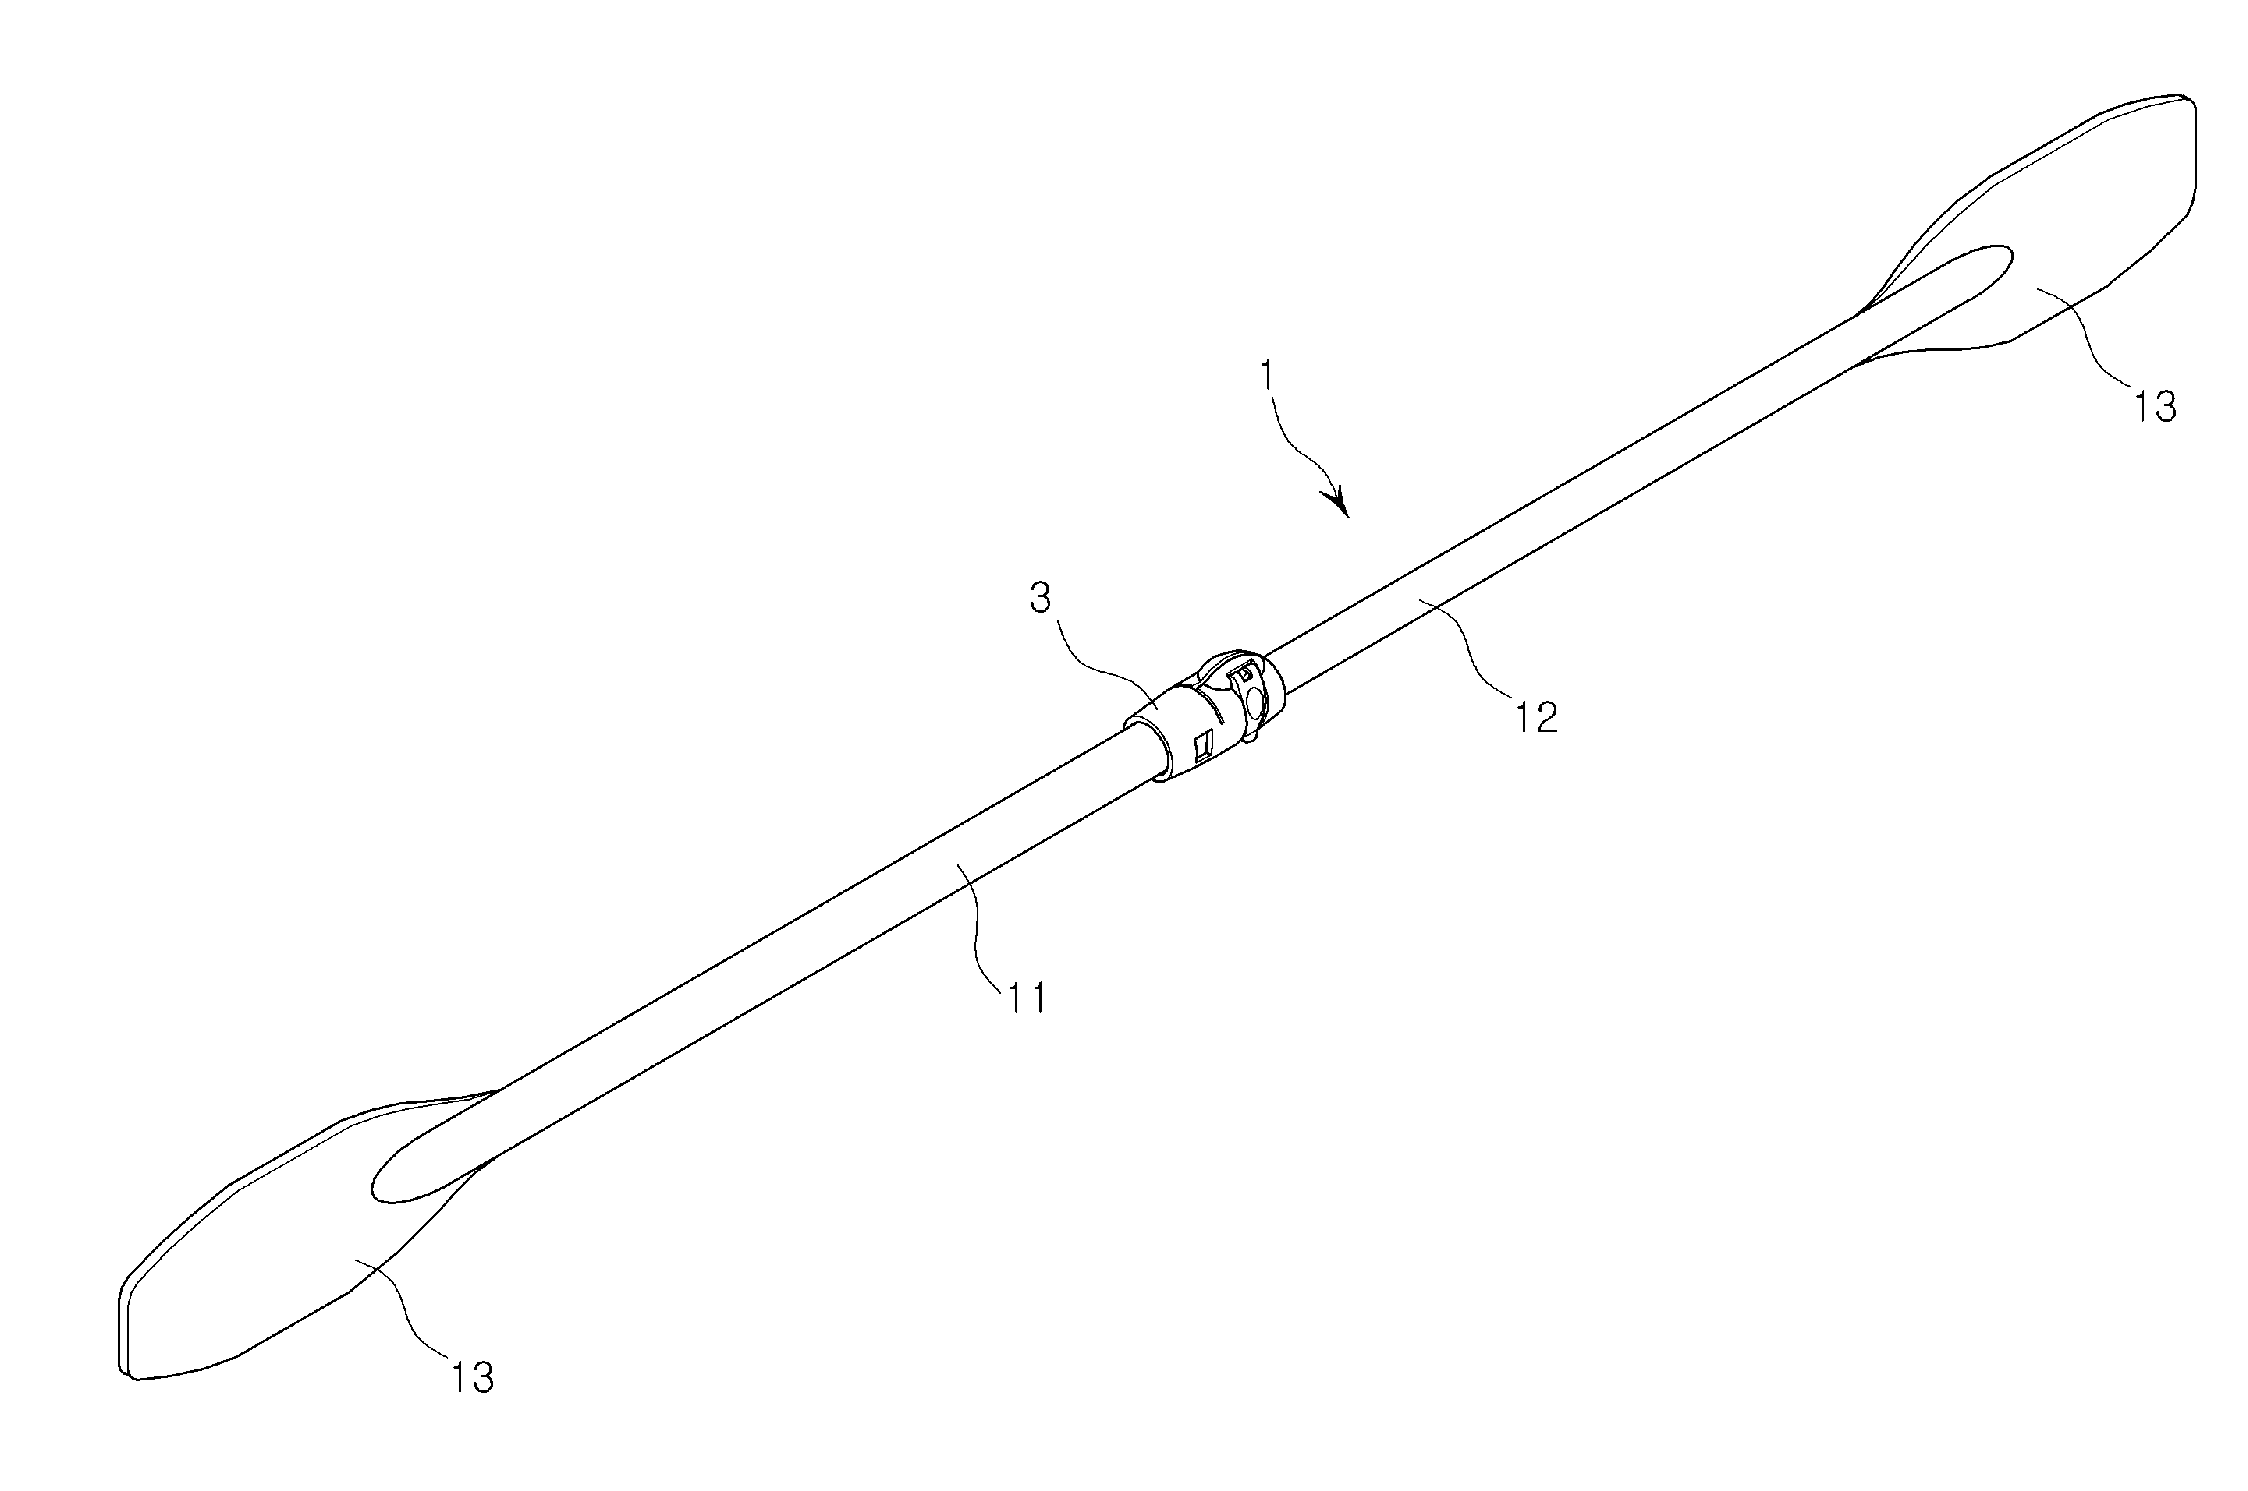 Paddle shaft length adjustment device